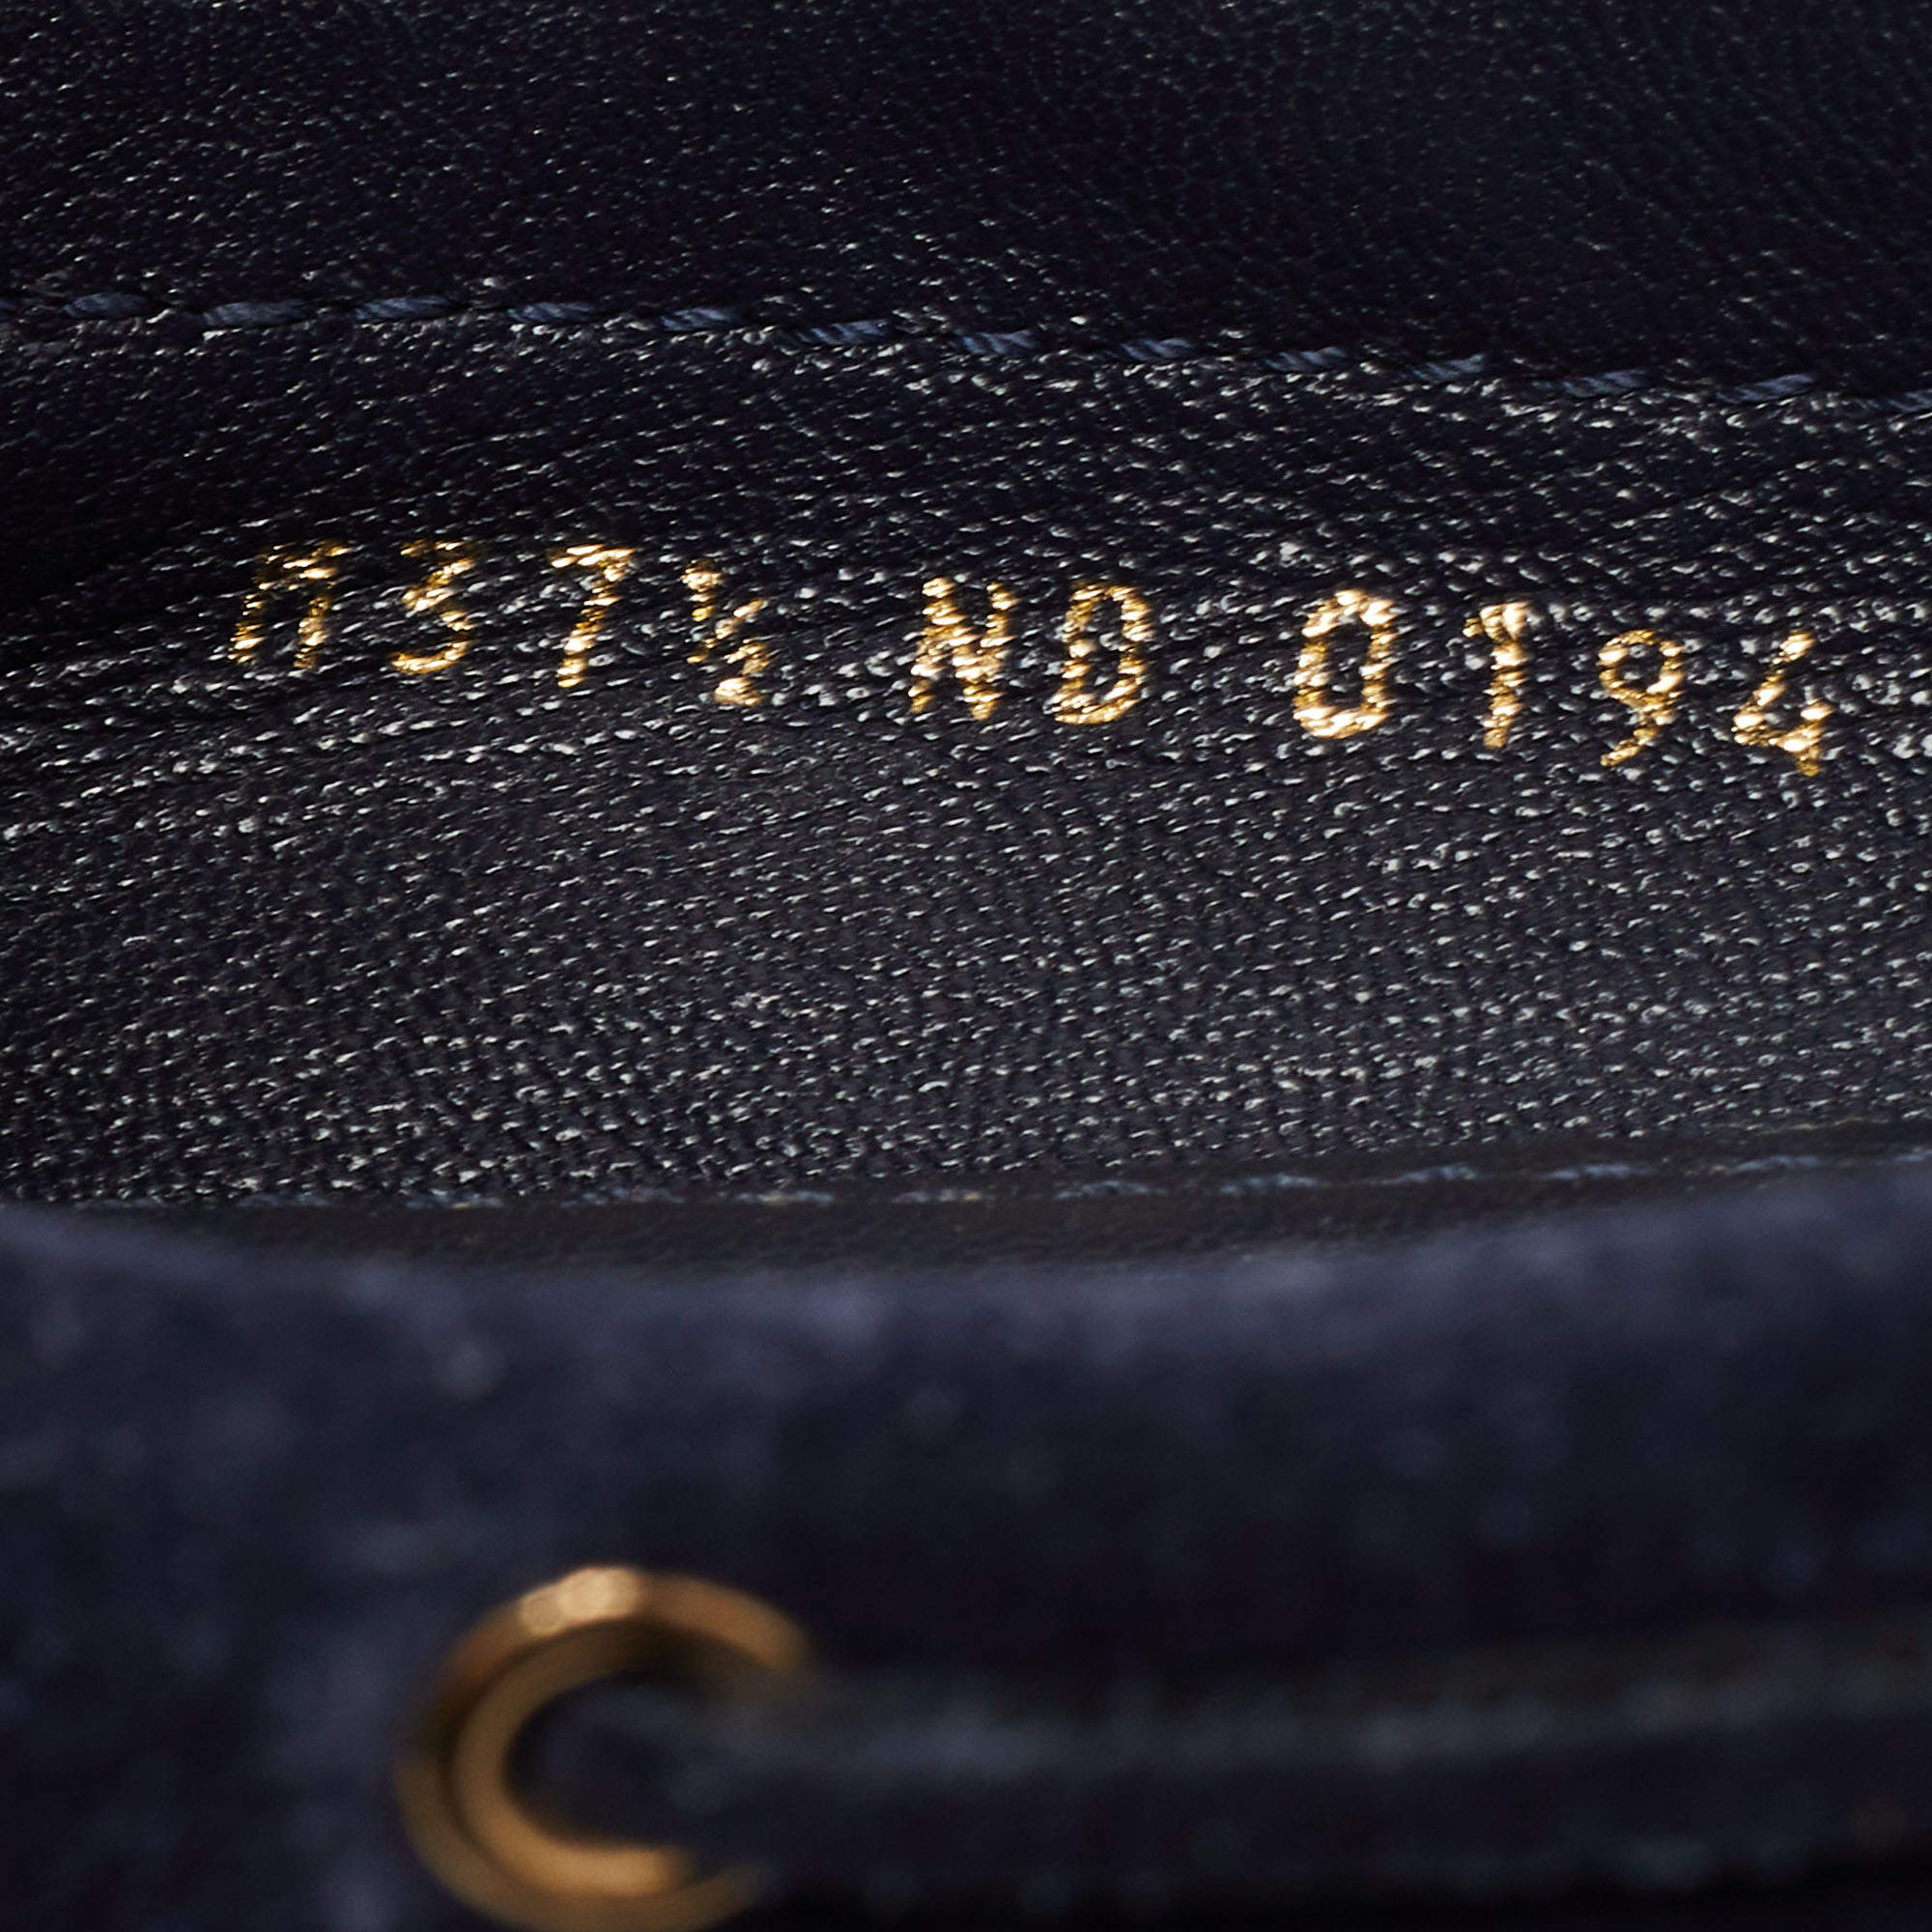 Louis Vuitton Blue Monogram Embossed Suede Gloria Flat Loafers Size 7 -  Yoogi's Closet